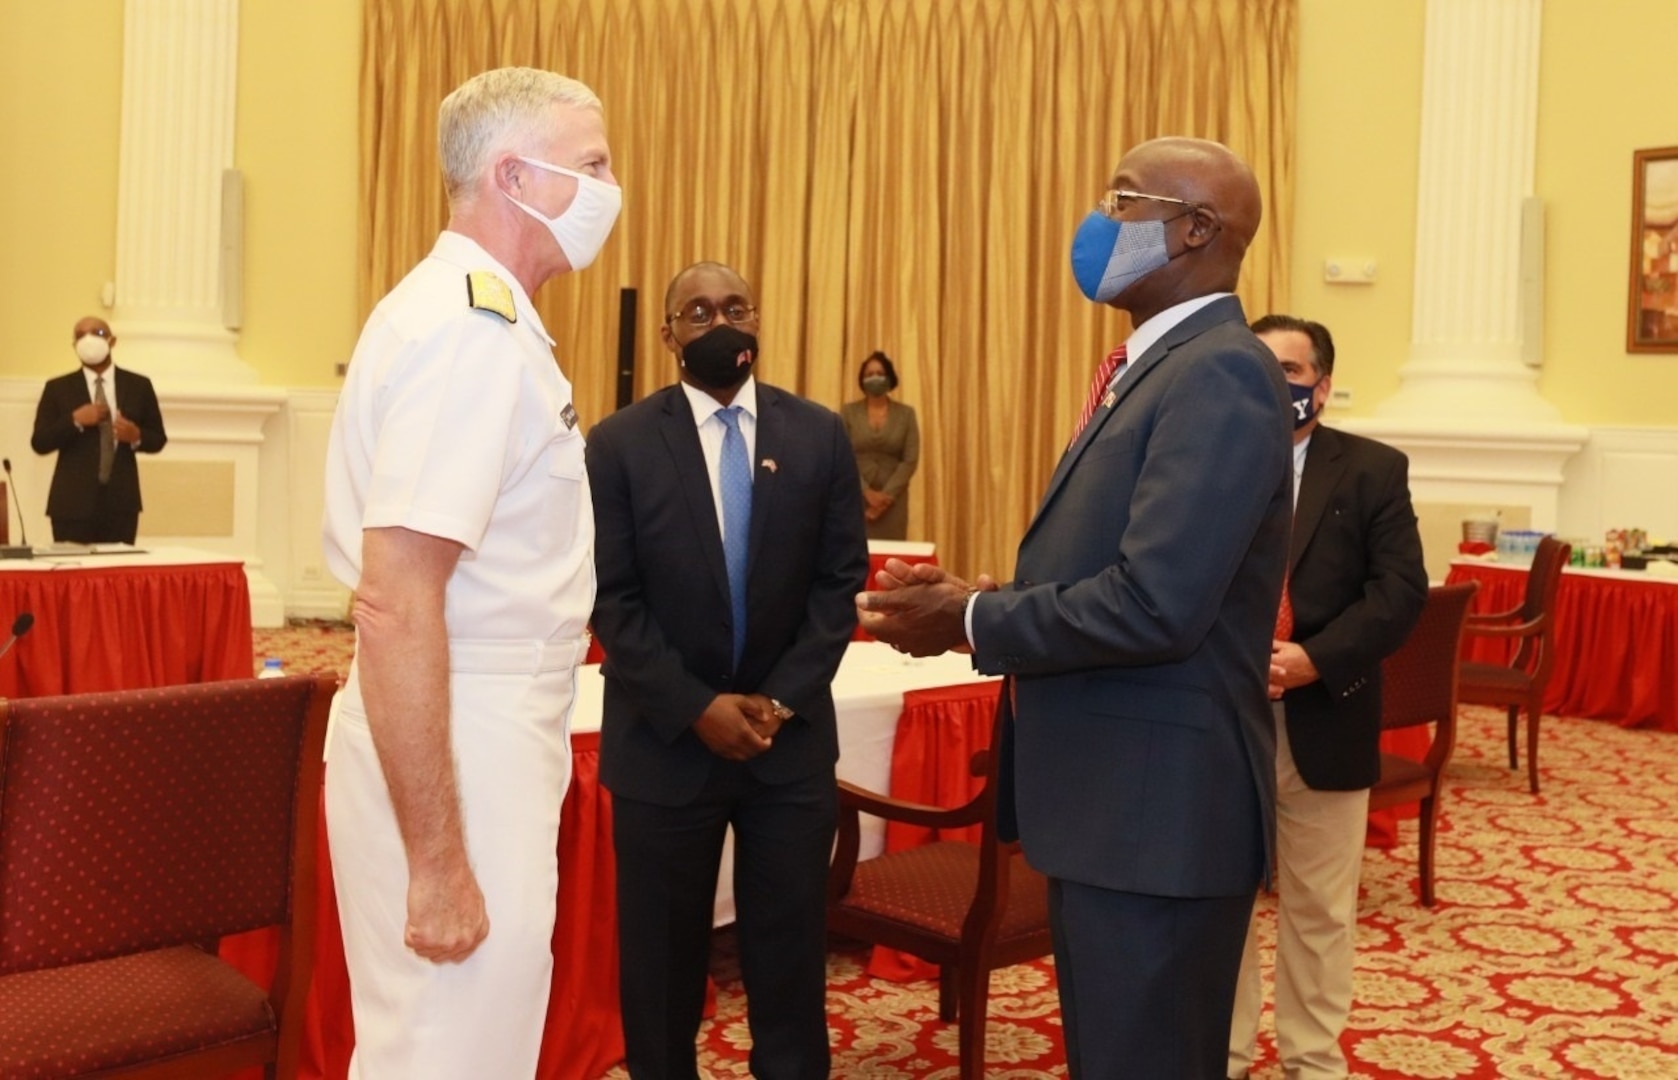 Trinidad and Tobago Prime Minister Dr. Keith Rowley meets with U.S. Navy Adm. Craig S. Faller.